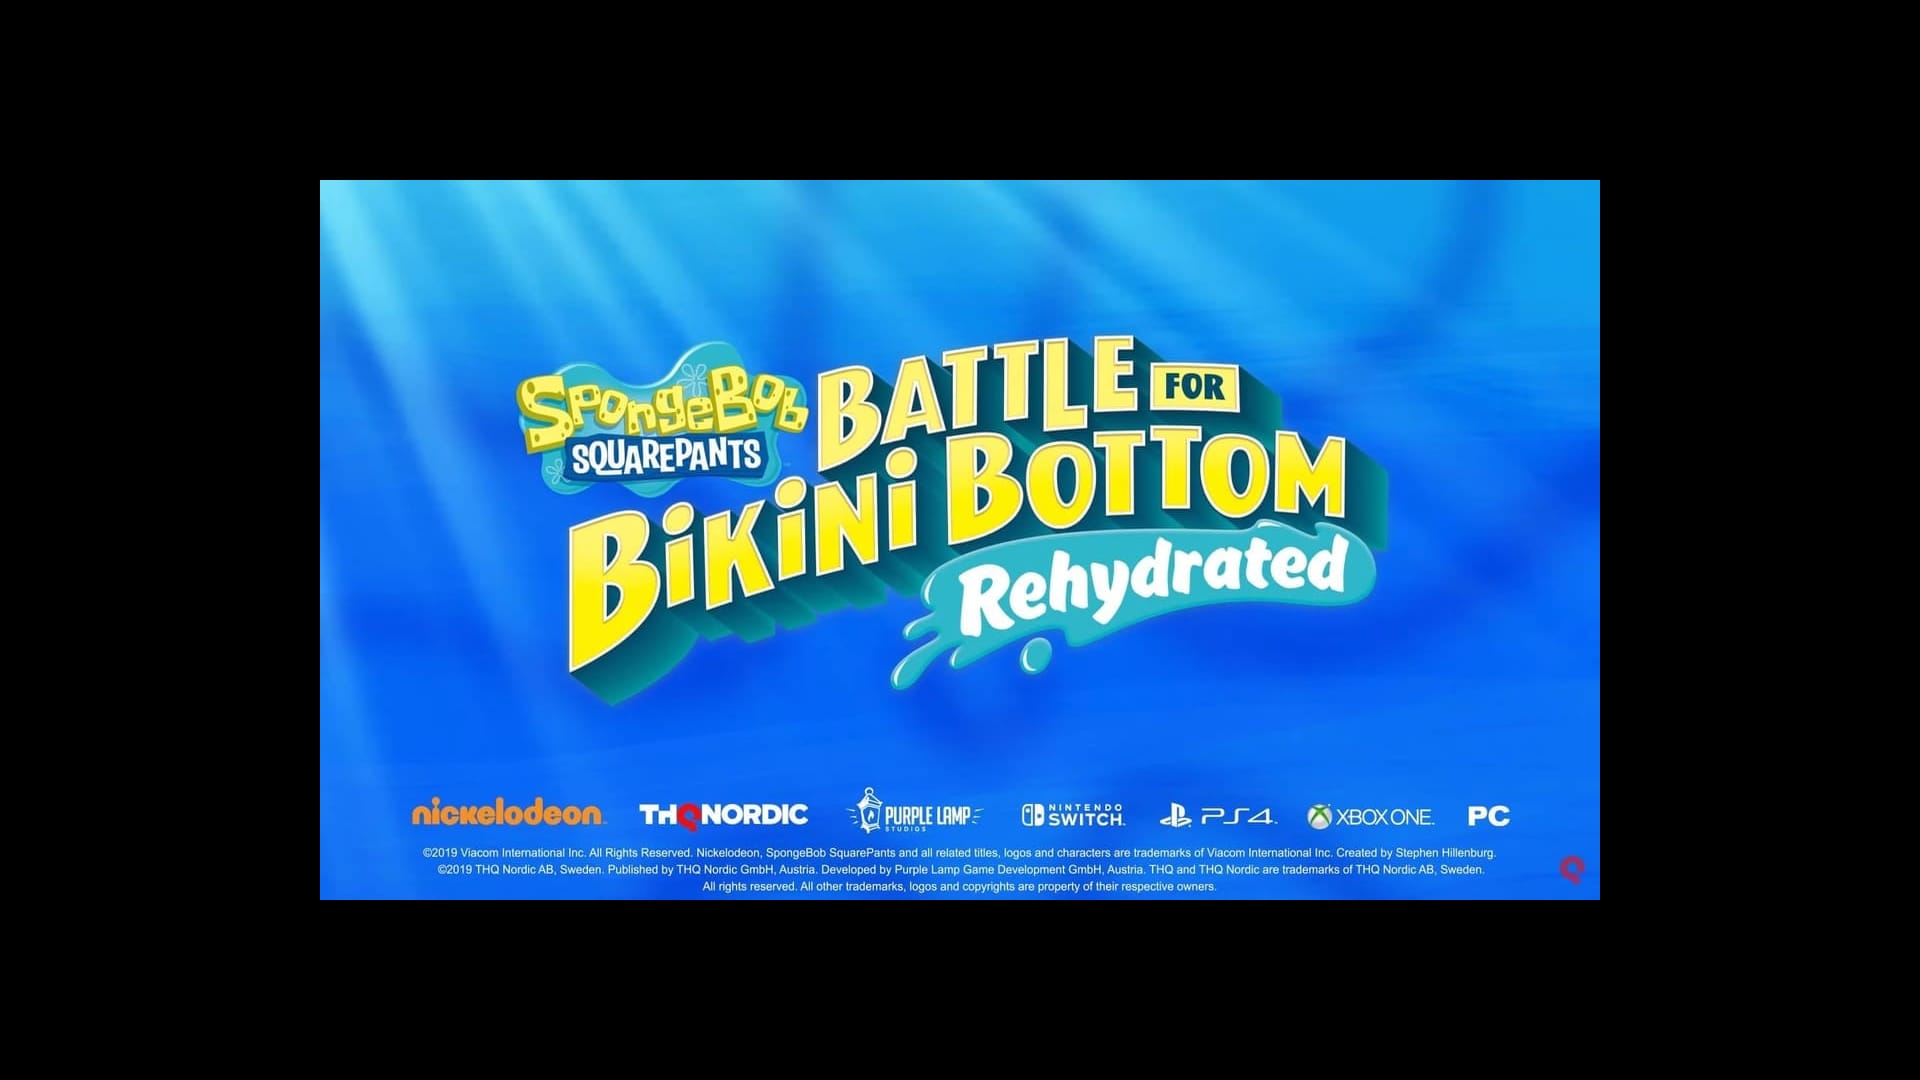 Bottom Bikini SquarePants: SpongeBob Battle | Remaster for Announced TechRaptor